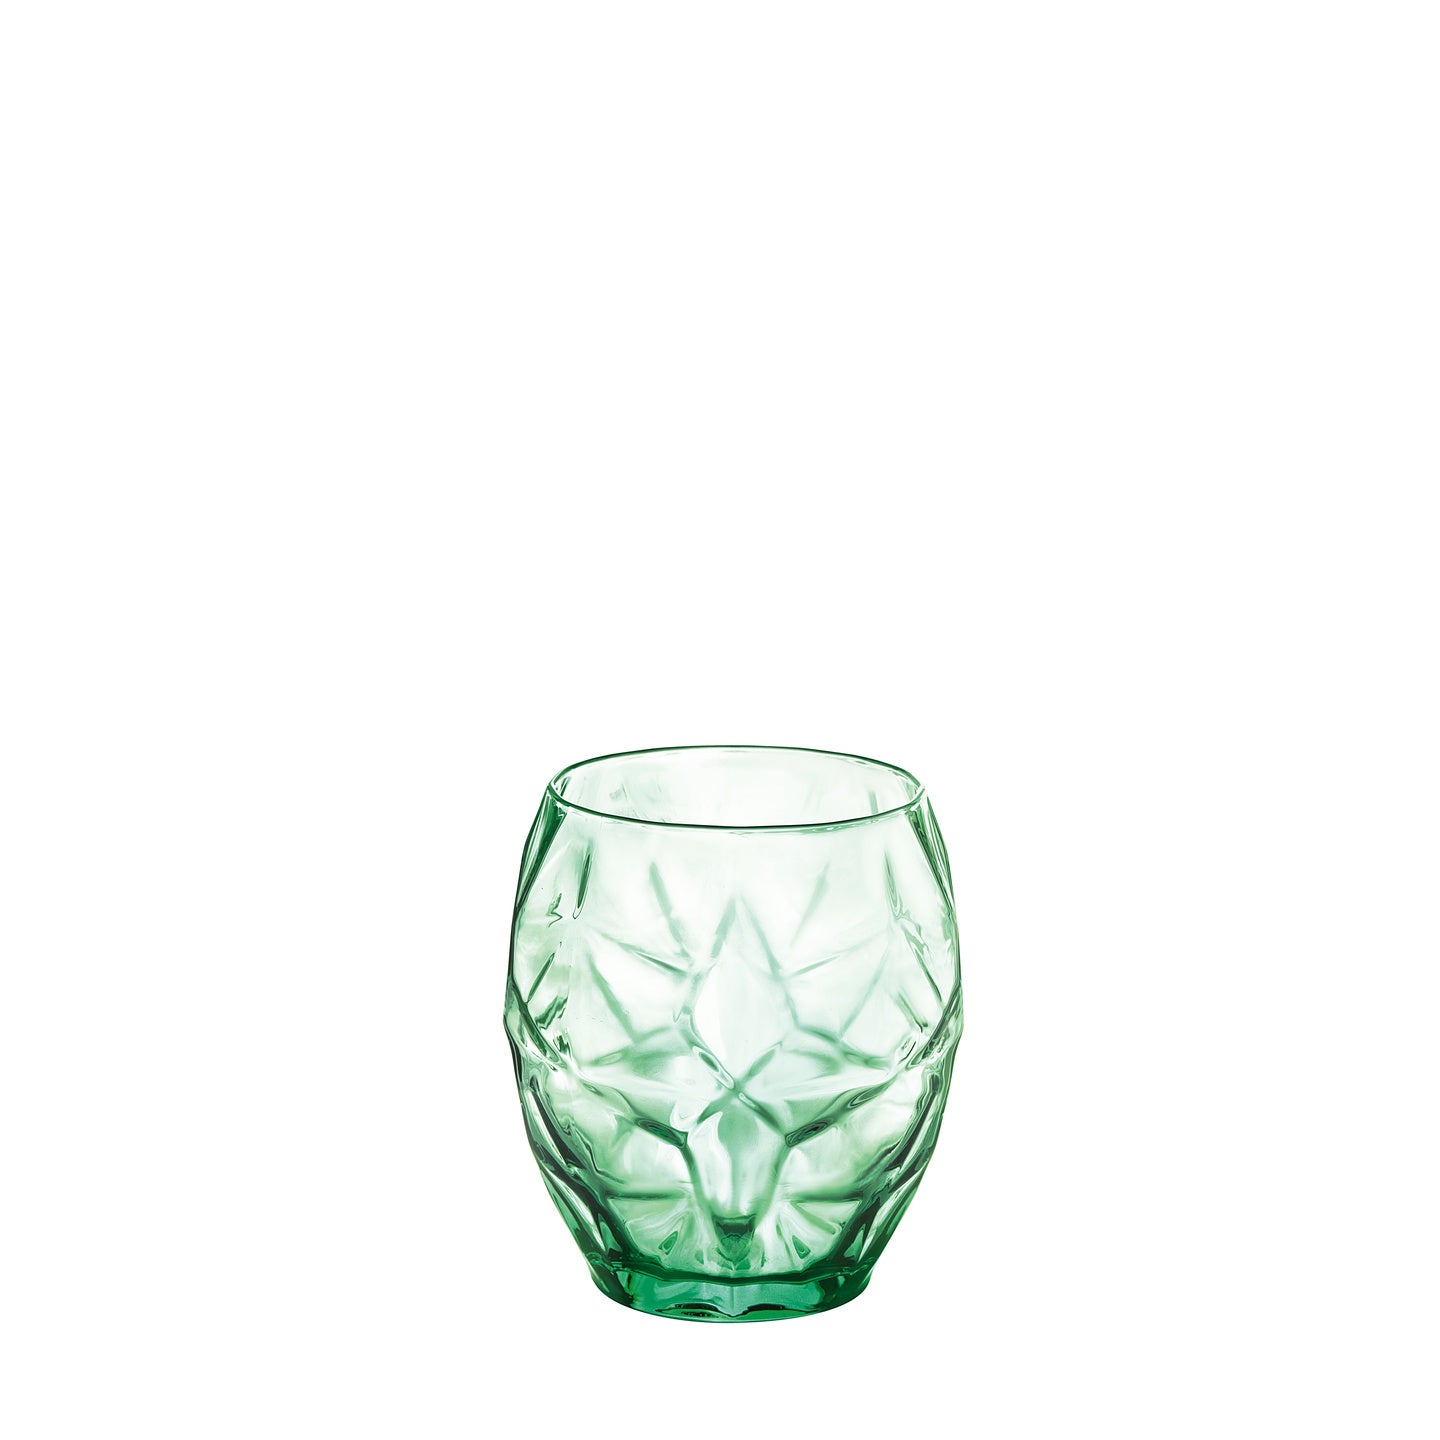 Oriente 17oz. DOF Drinking Glasses (Set of 6)